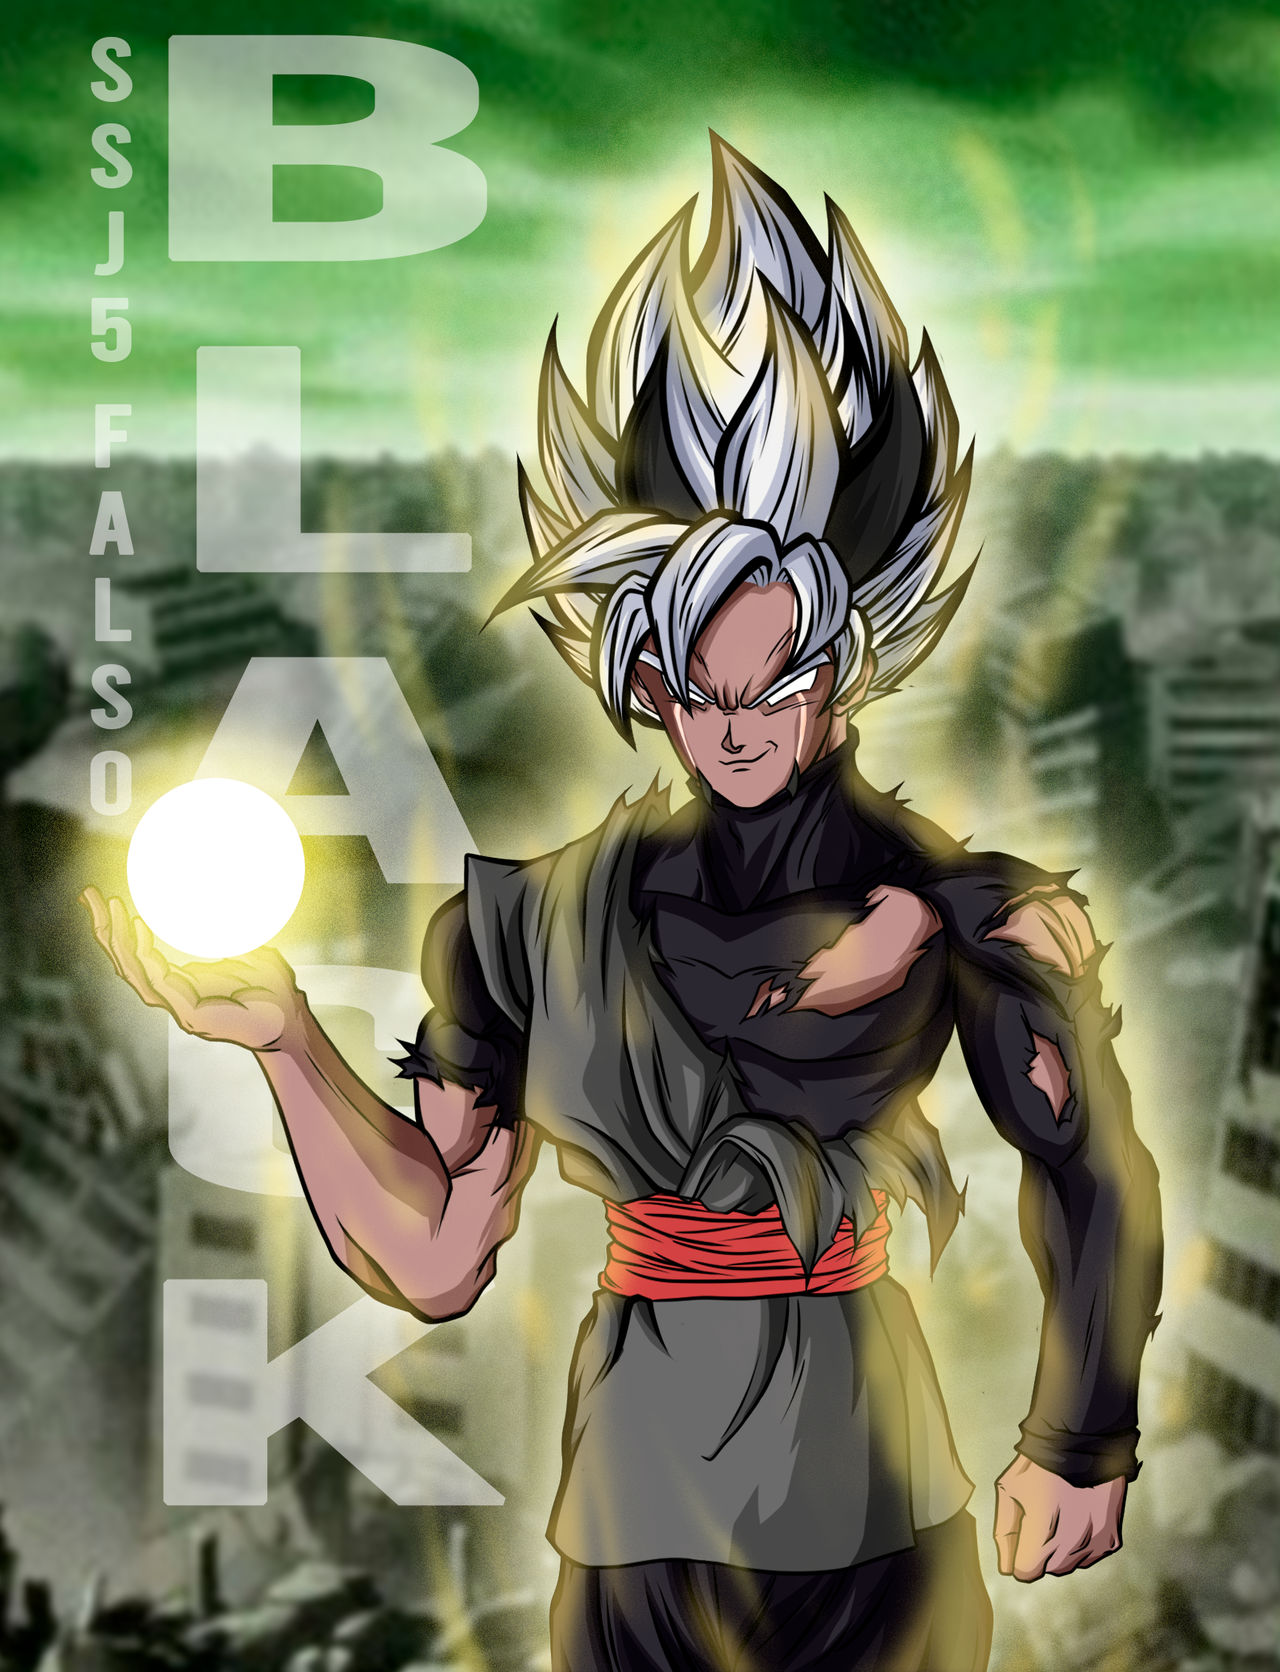 Dragon Ball Super Manga - Black Frieza Concept 1 by GoketerHC on DeviantArt